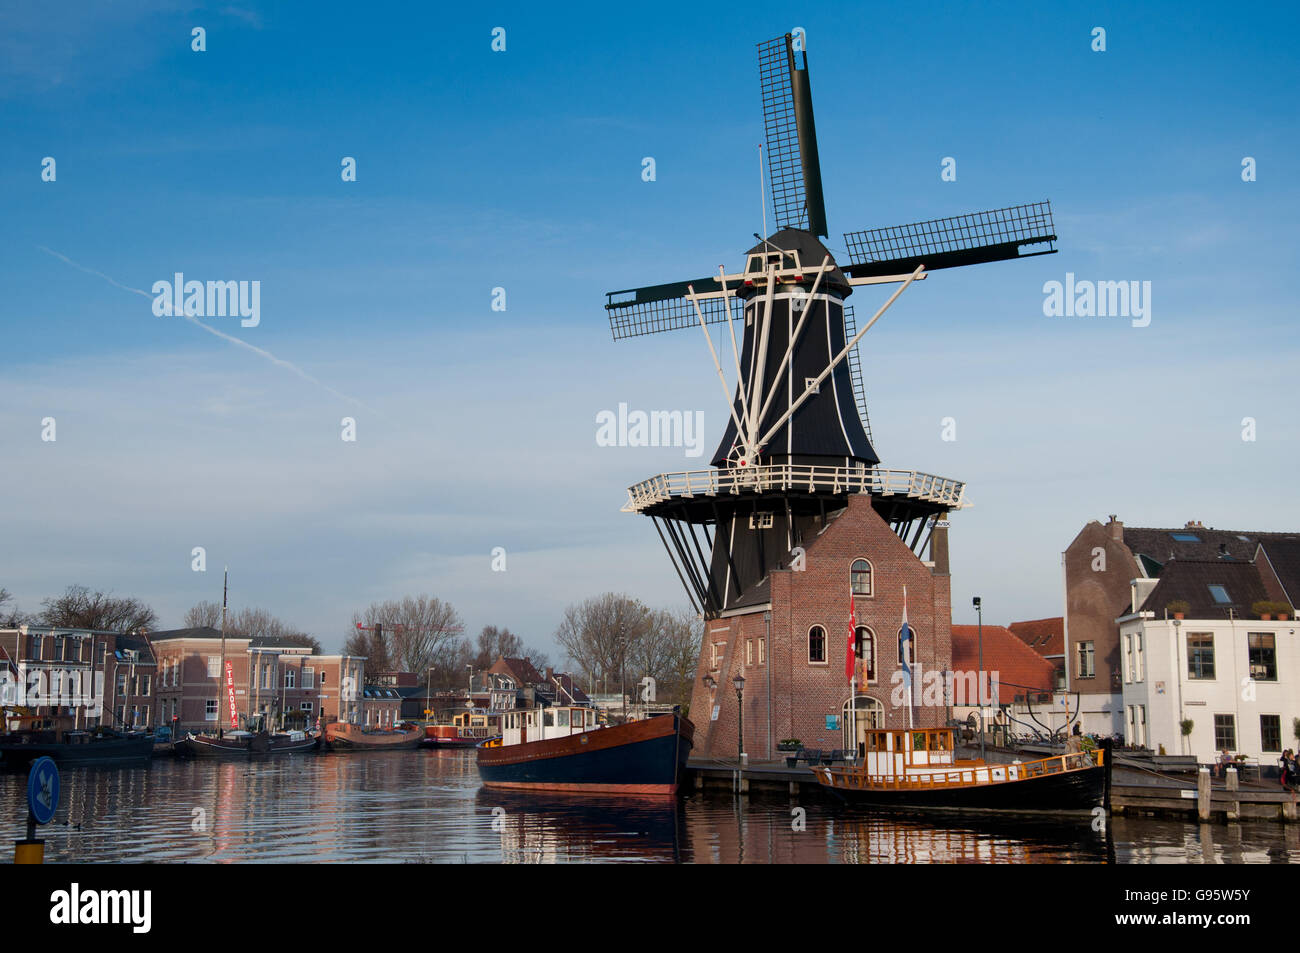 Moulin scene de Adriaan de Haarlem city en Pays-Bas Banque D'Images